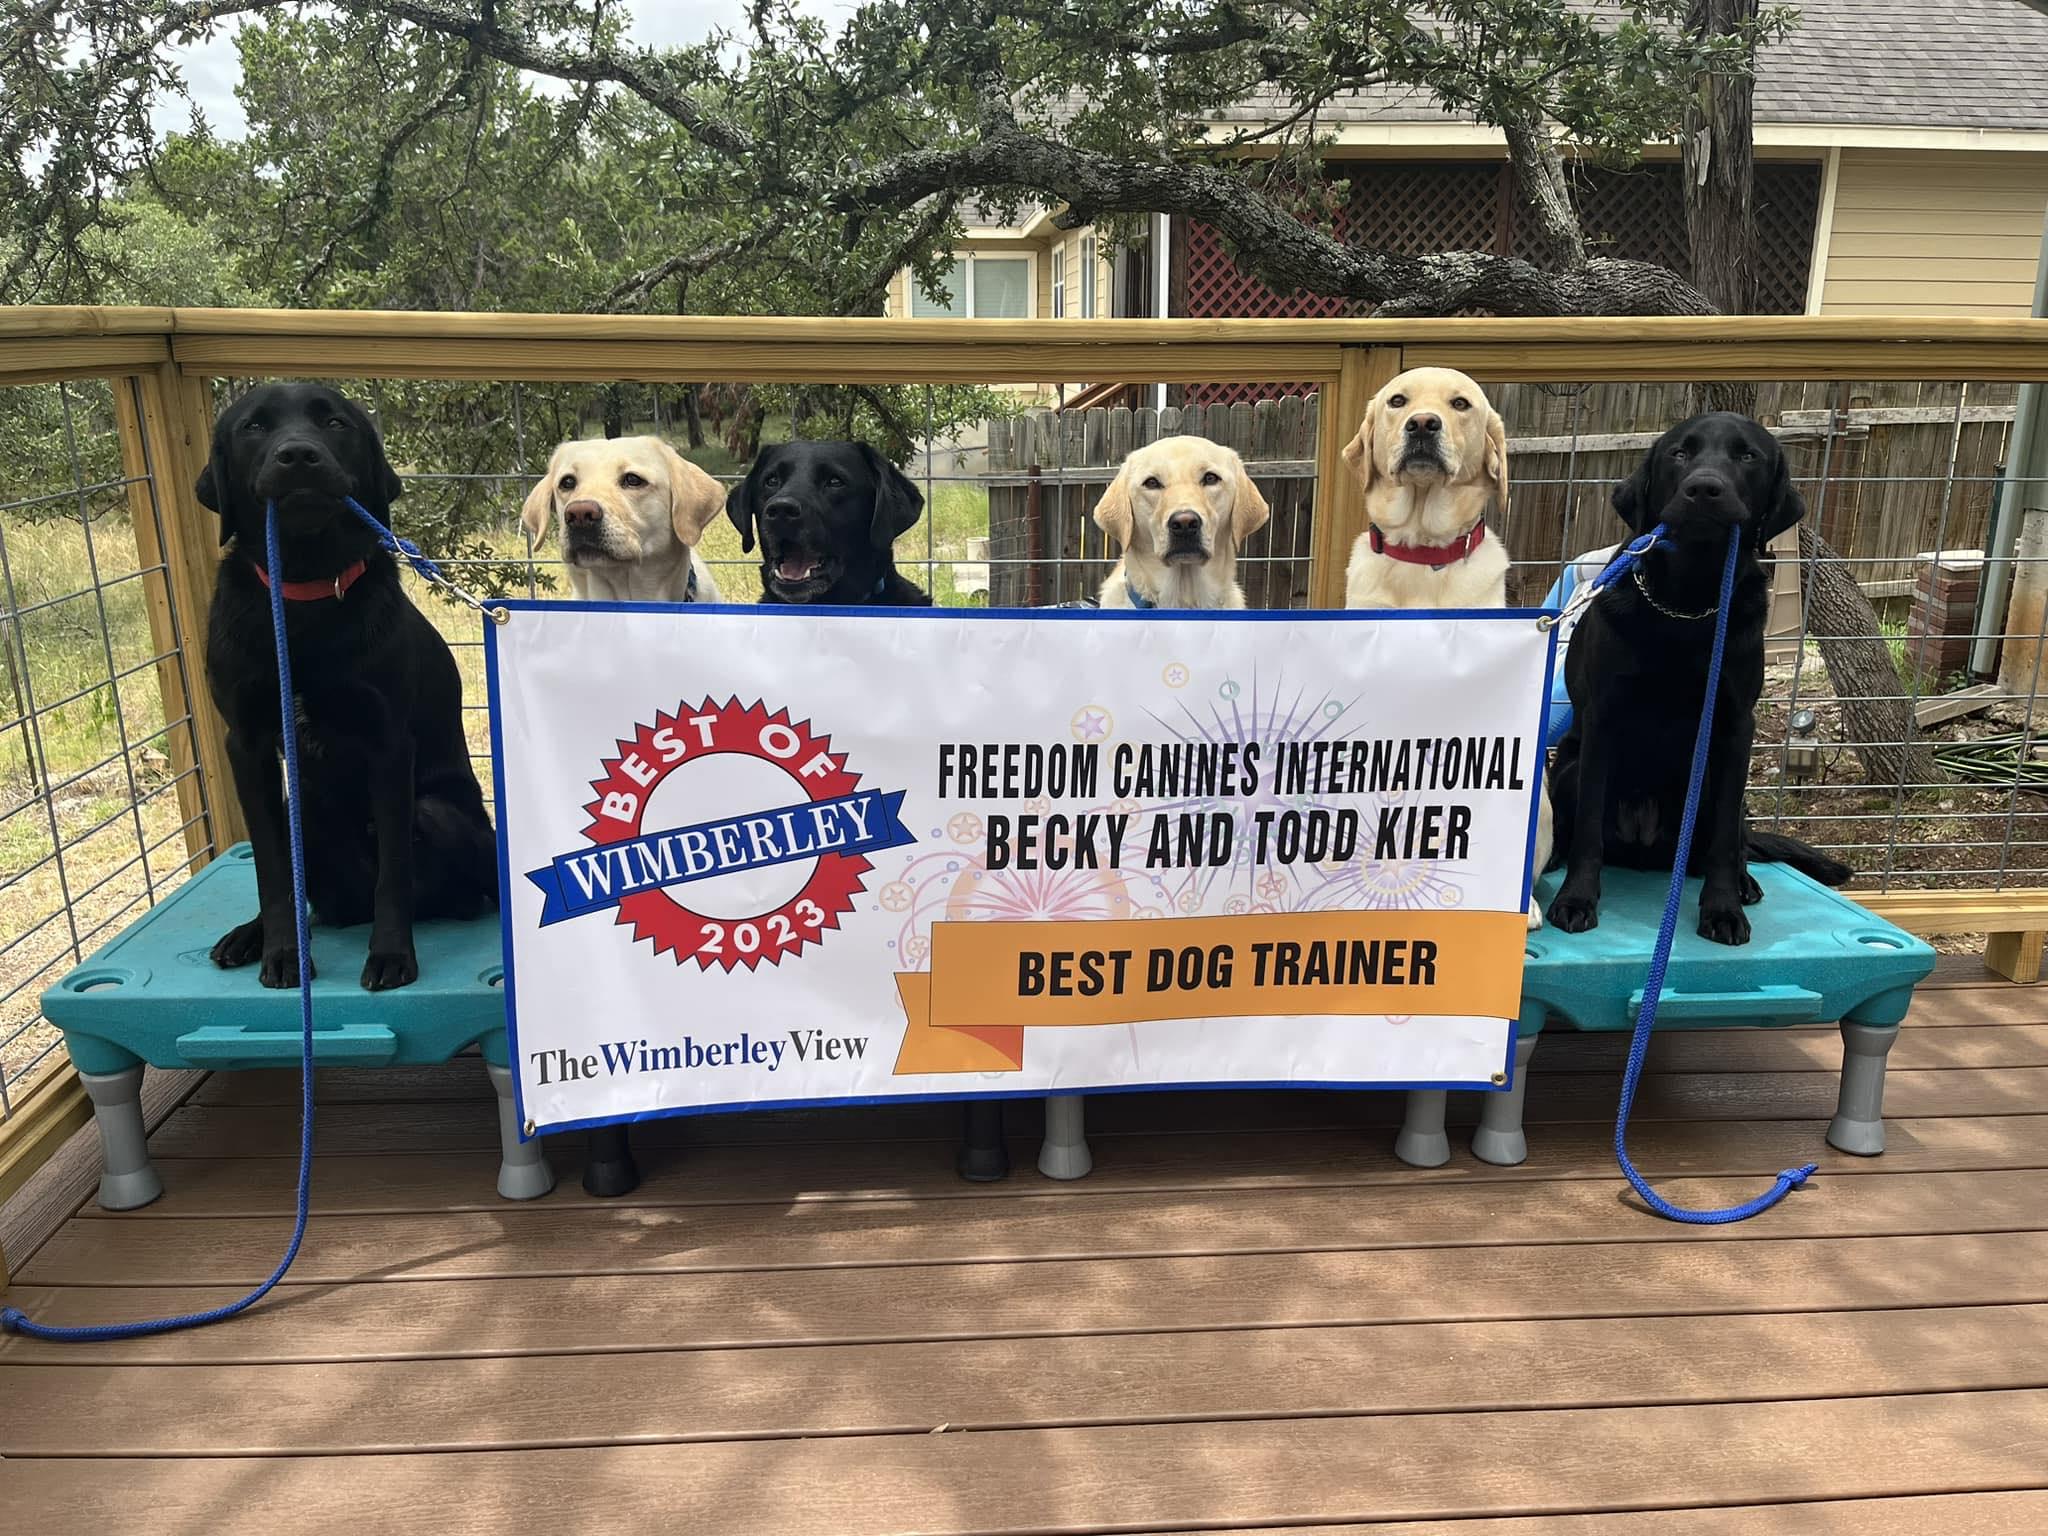 Pet Friendly Freedom Canines International